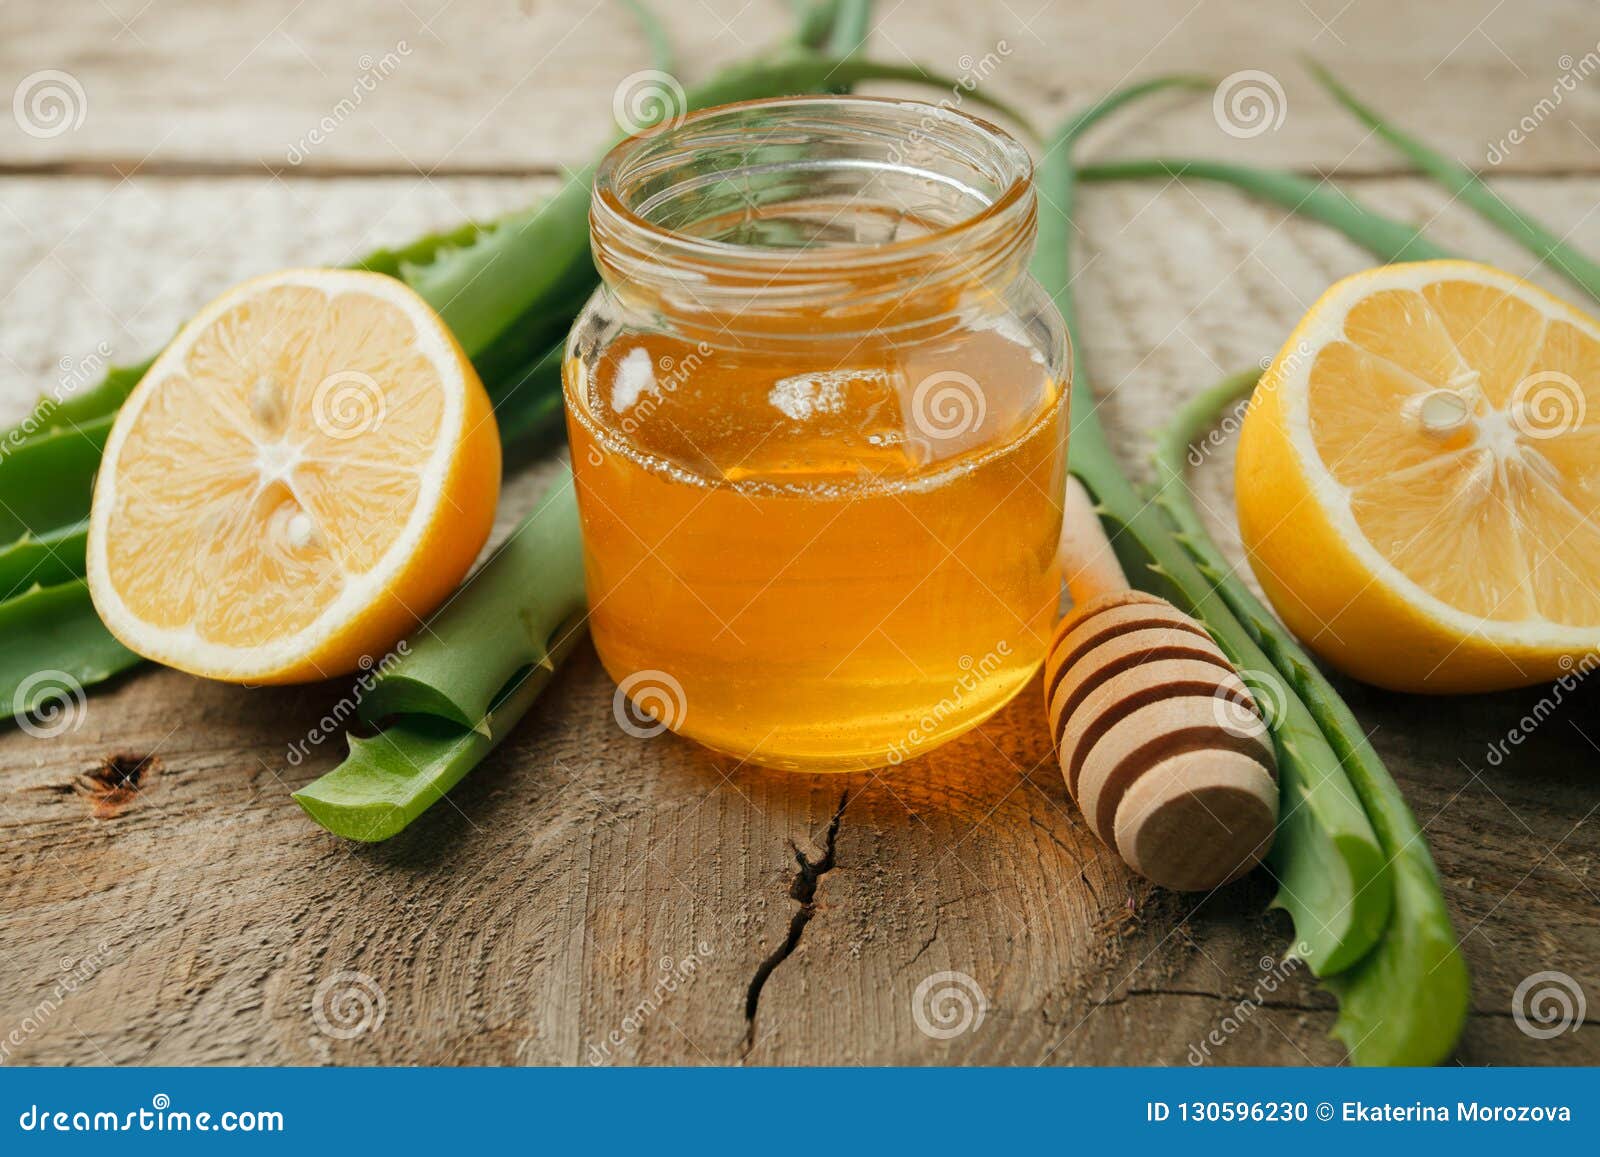 Aloe Vera, Fresh Lemon and Honey. Natural Facial, Skin and Hair Care Recipe  Stock Photo - Image of citrus, hair: 130596230